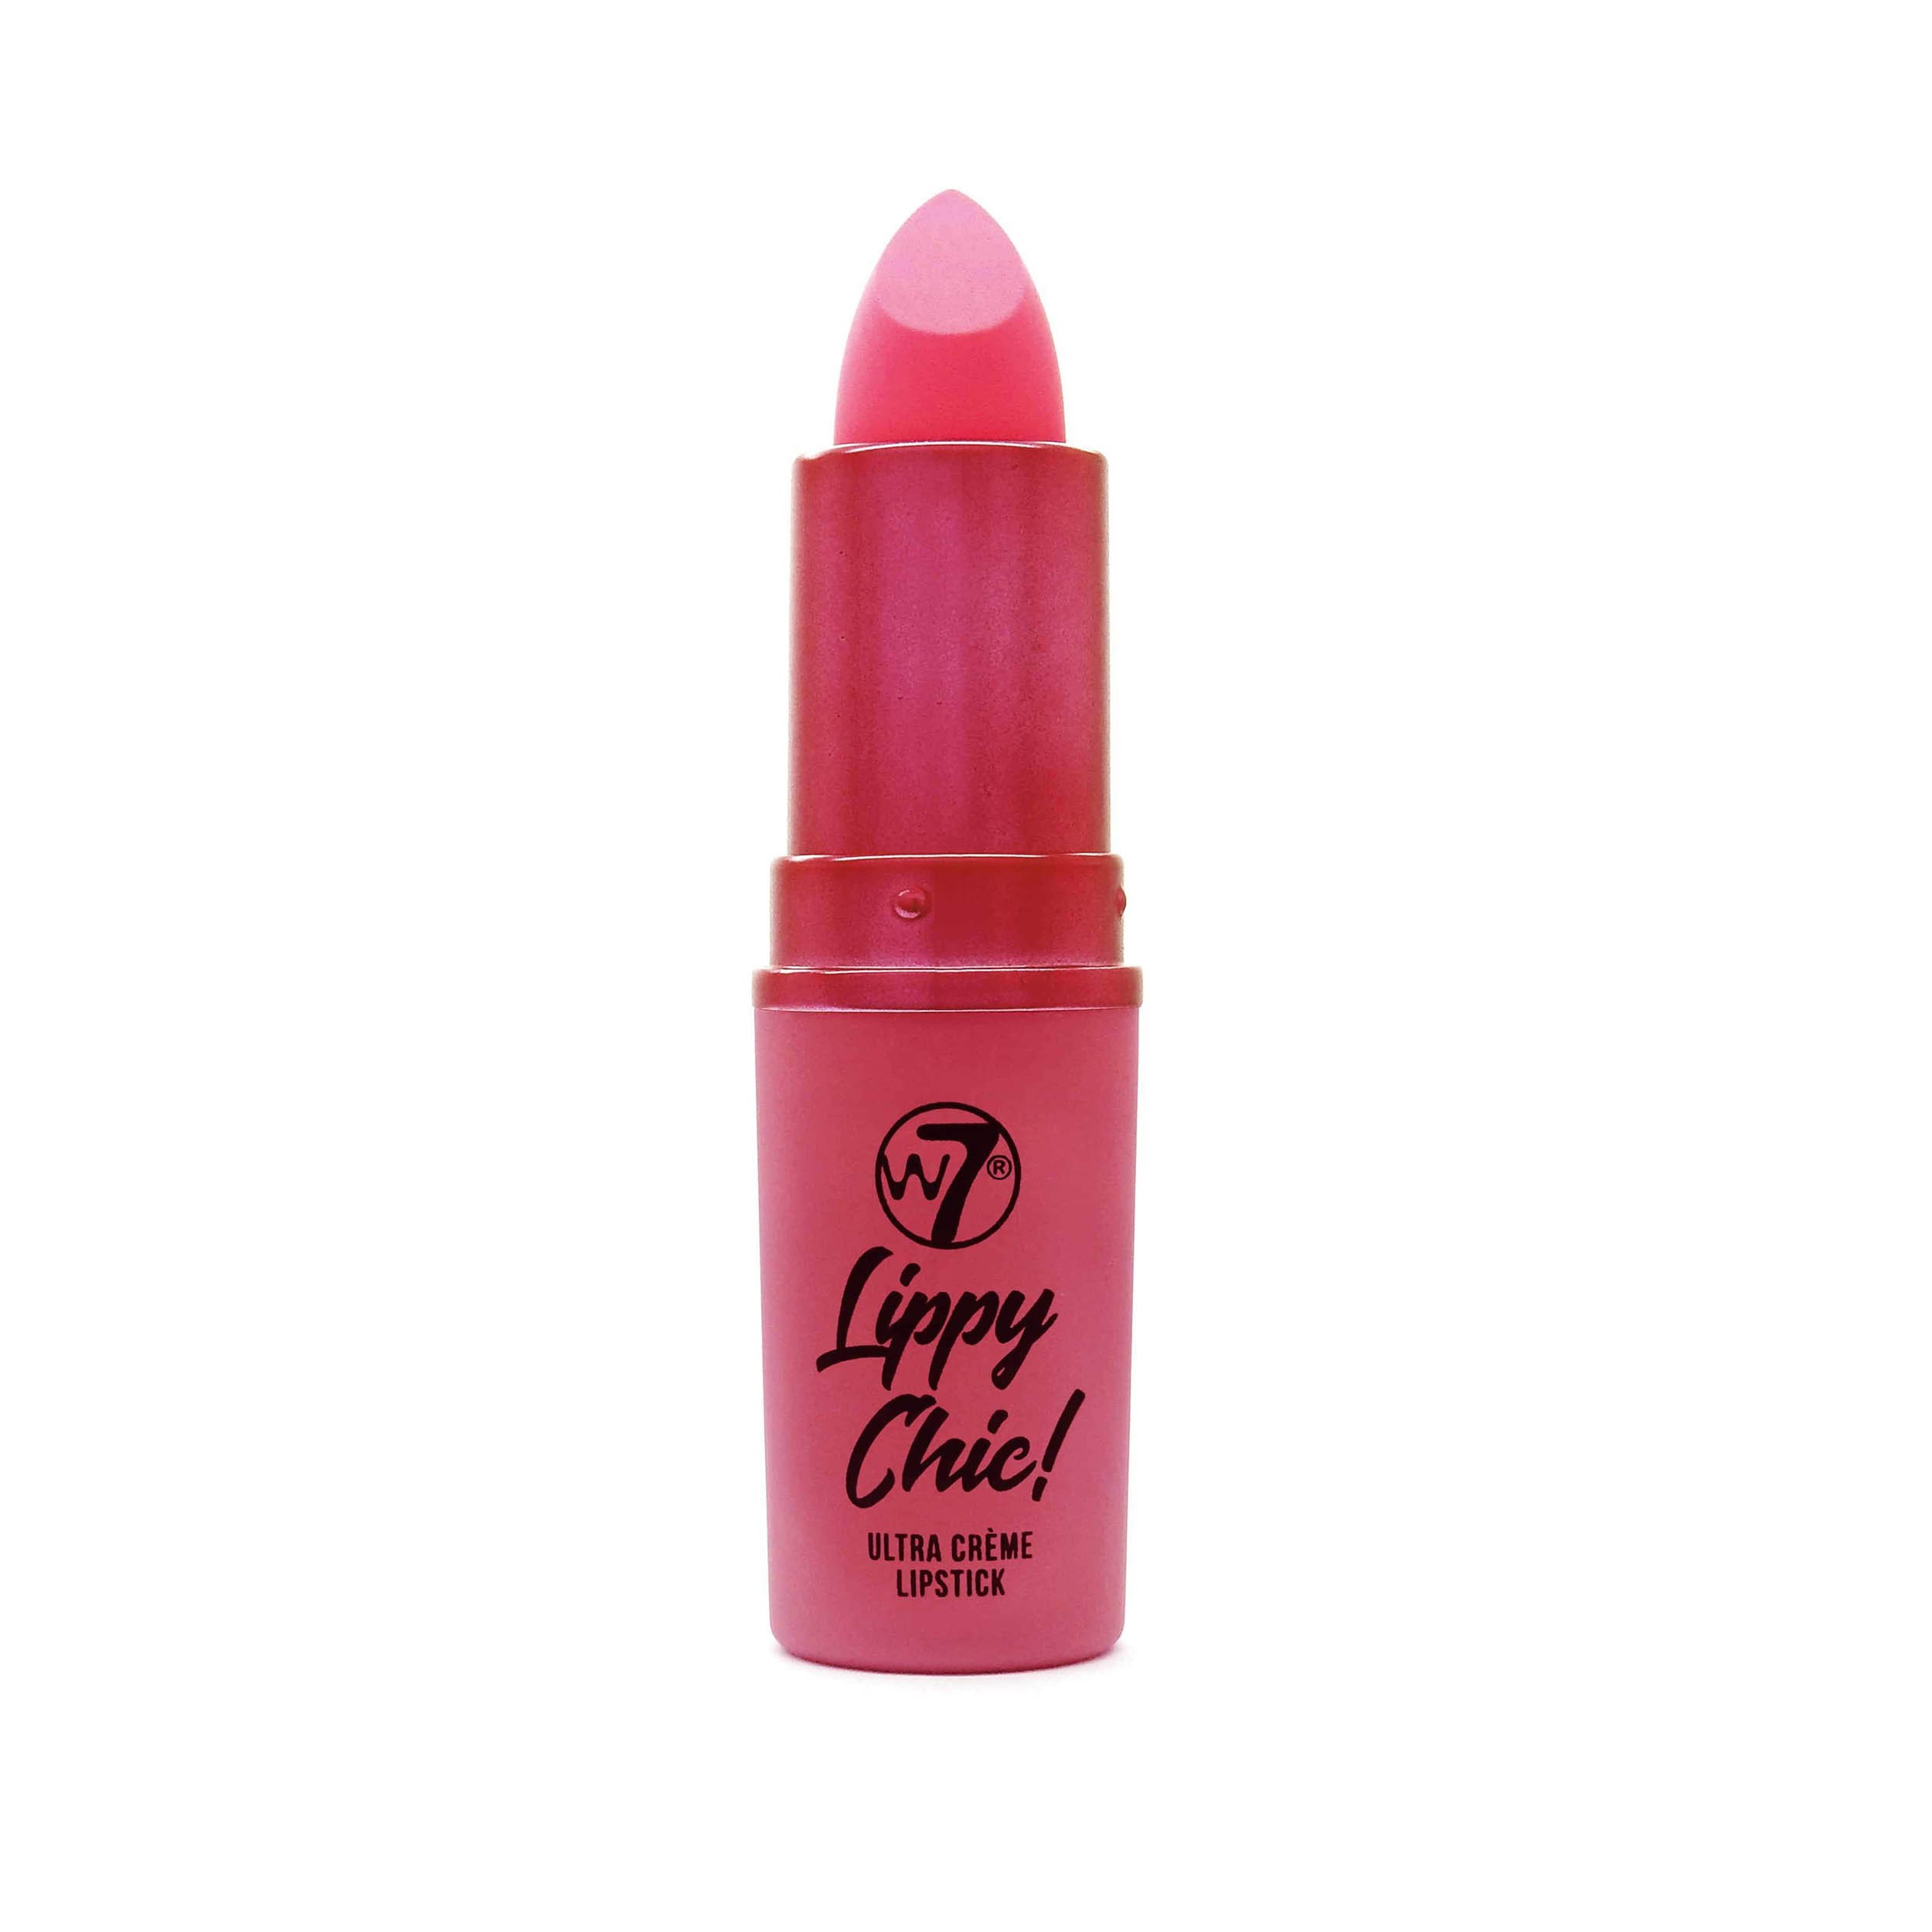 Rouge à Lèvres - Lippy Chic Ultra Creme Lipstick